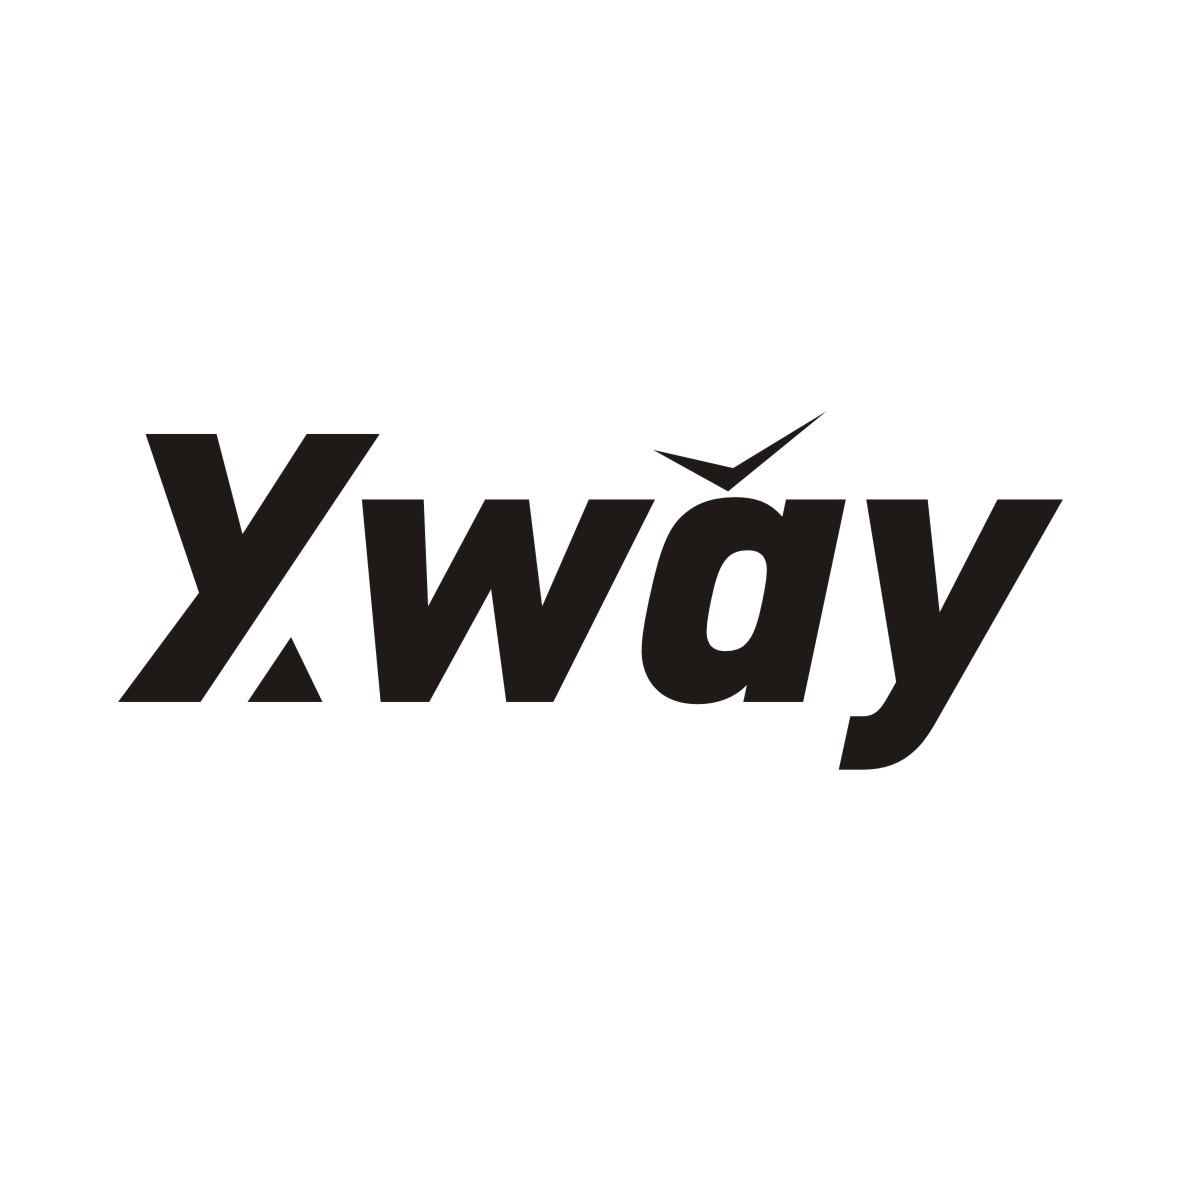 Y.WAY滑板商标转让费用买卖交易流程